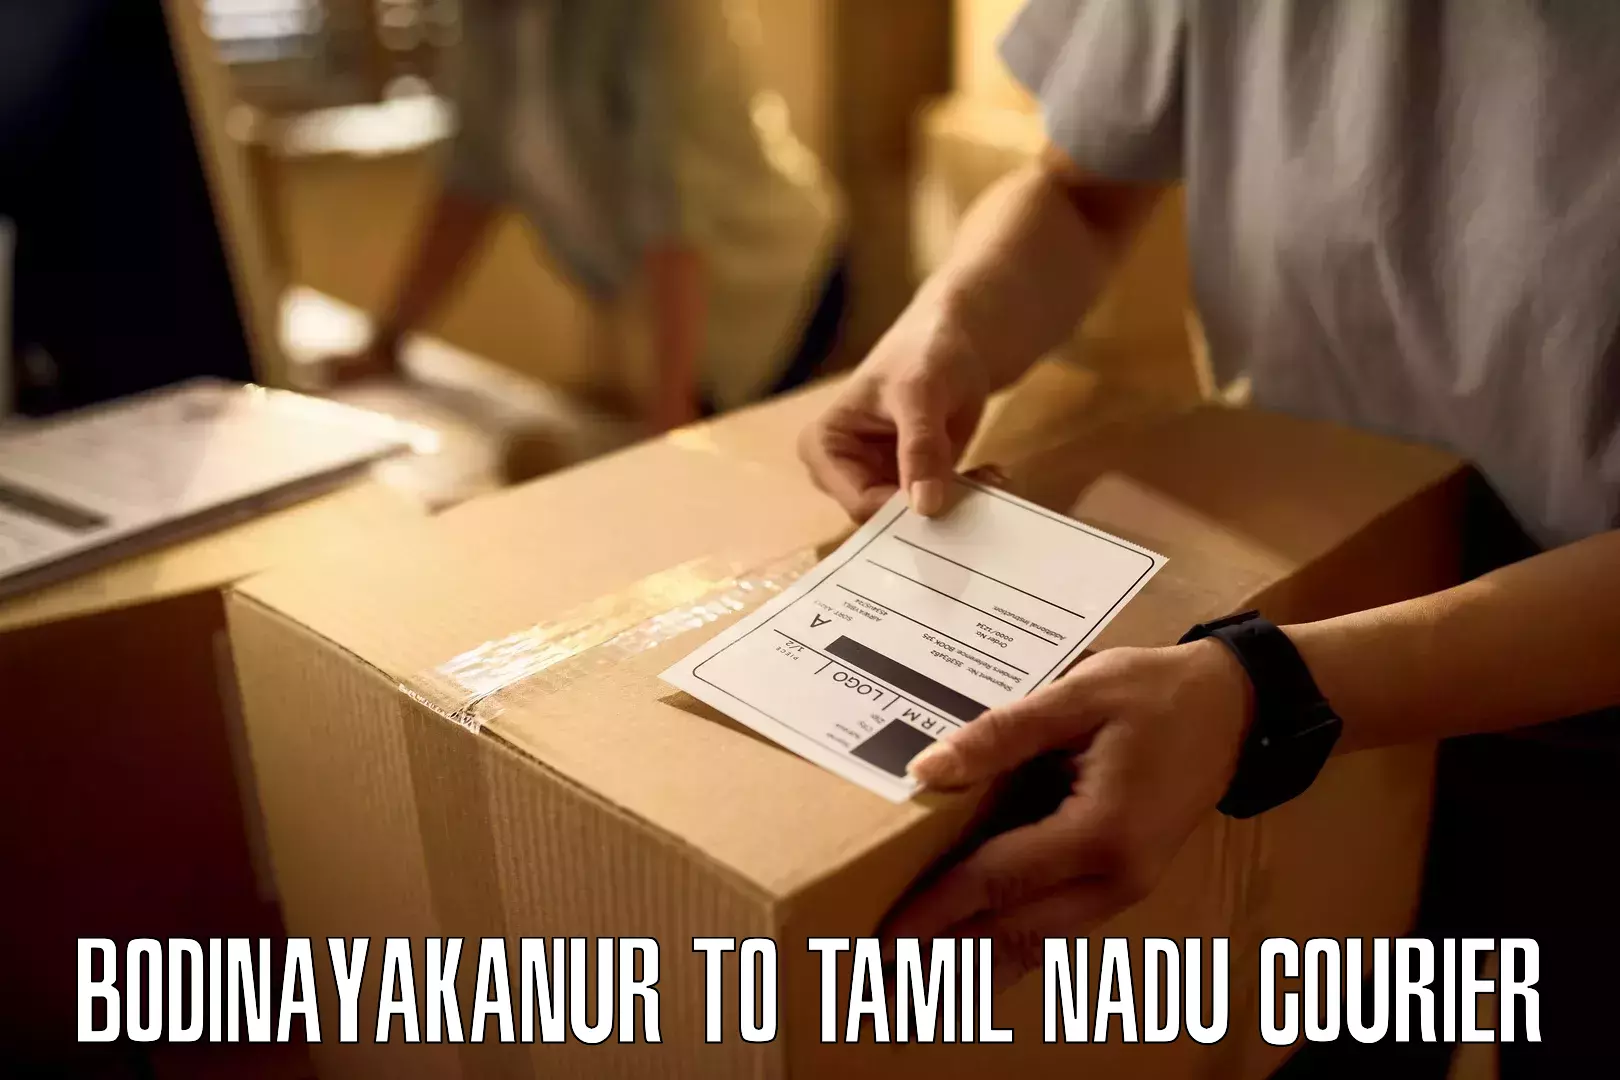 Efficient shipping platforms Bodinayakanur to Tamil Nadu